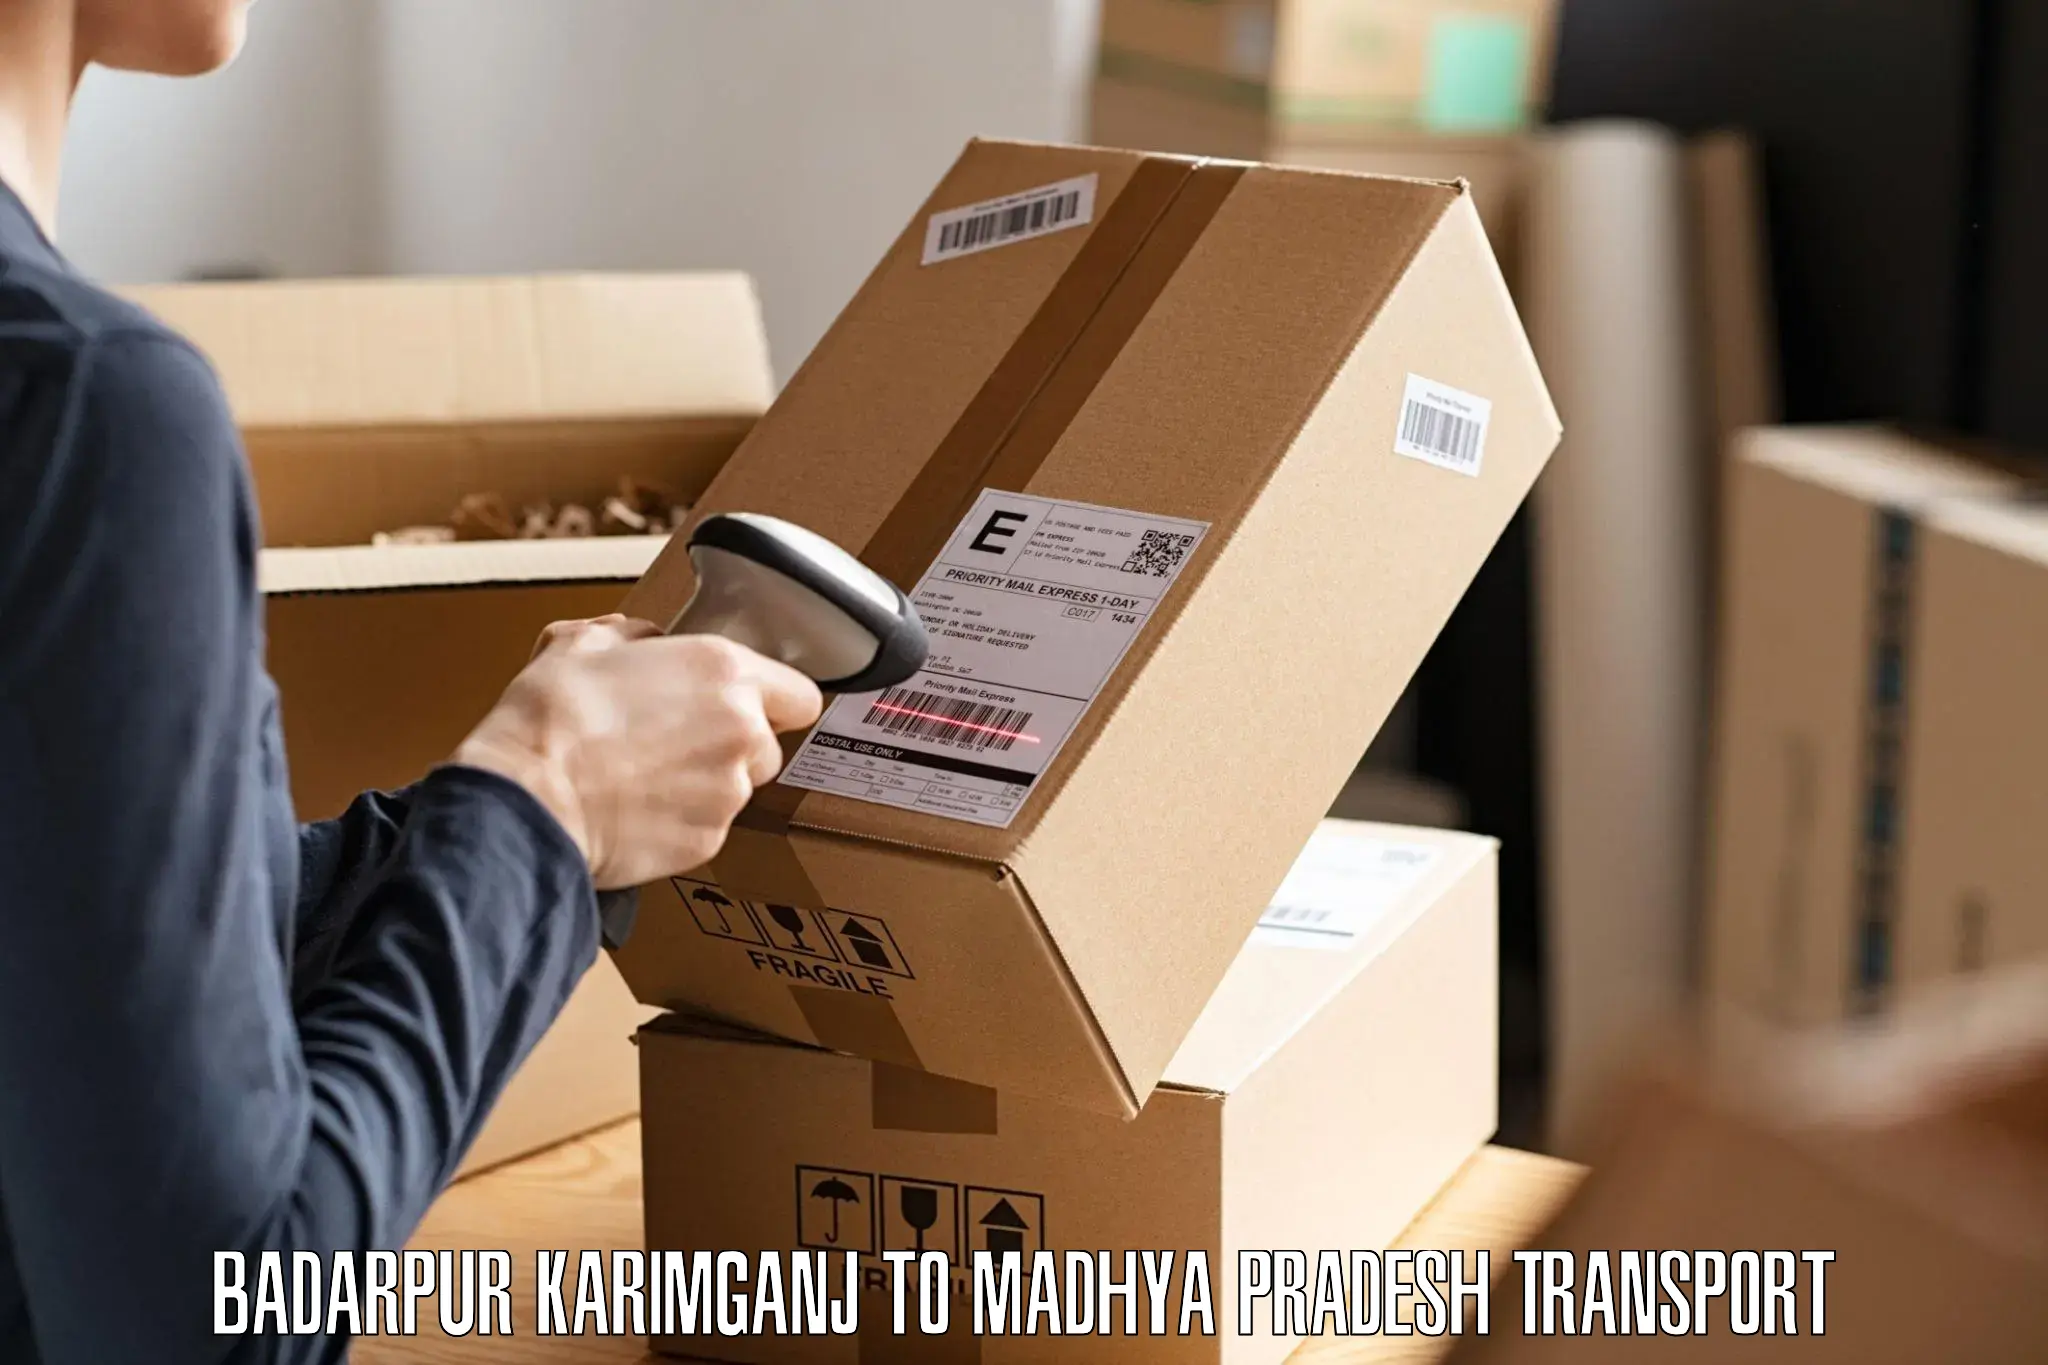 Shipping partner Badarpur Karimganj to Chapda